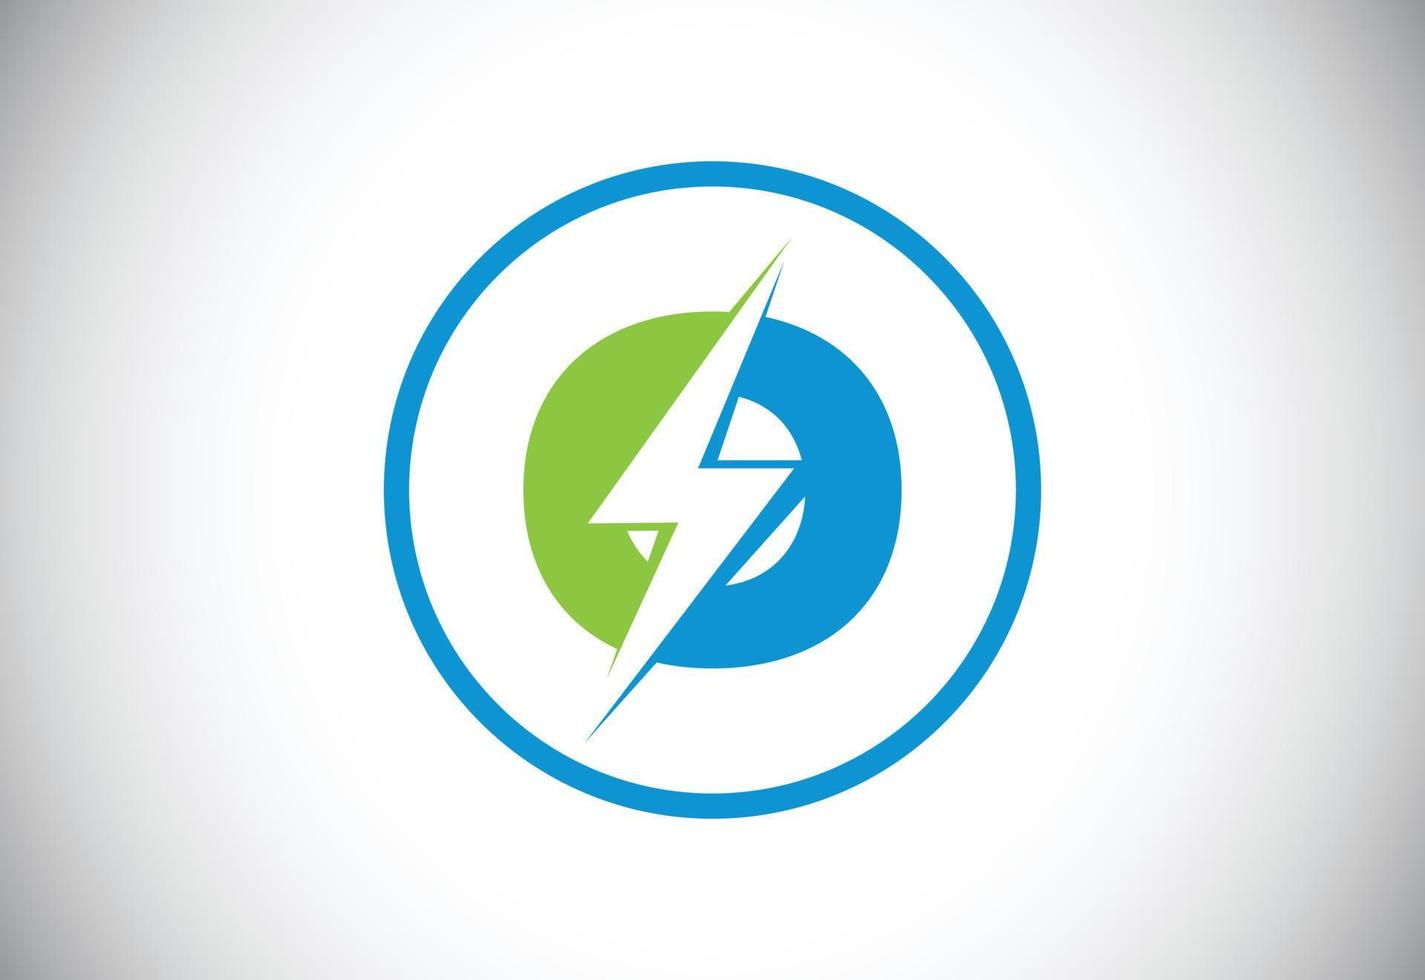 Initial O letter logo design with lighting thunder bolt. Electric bolt letter logo vector